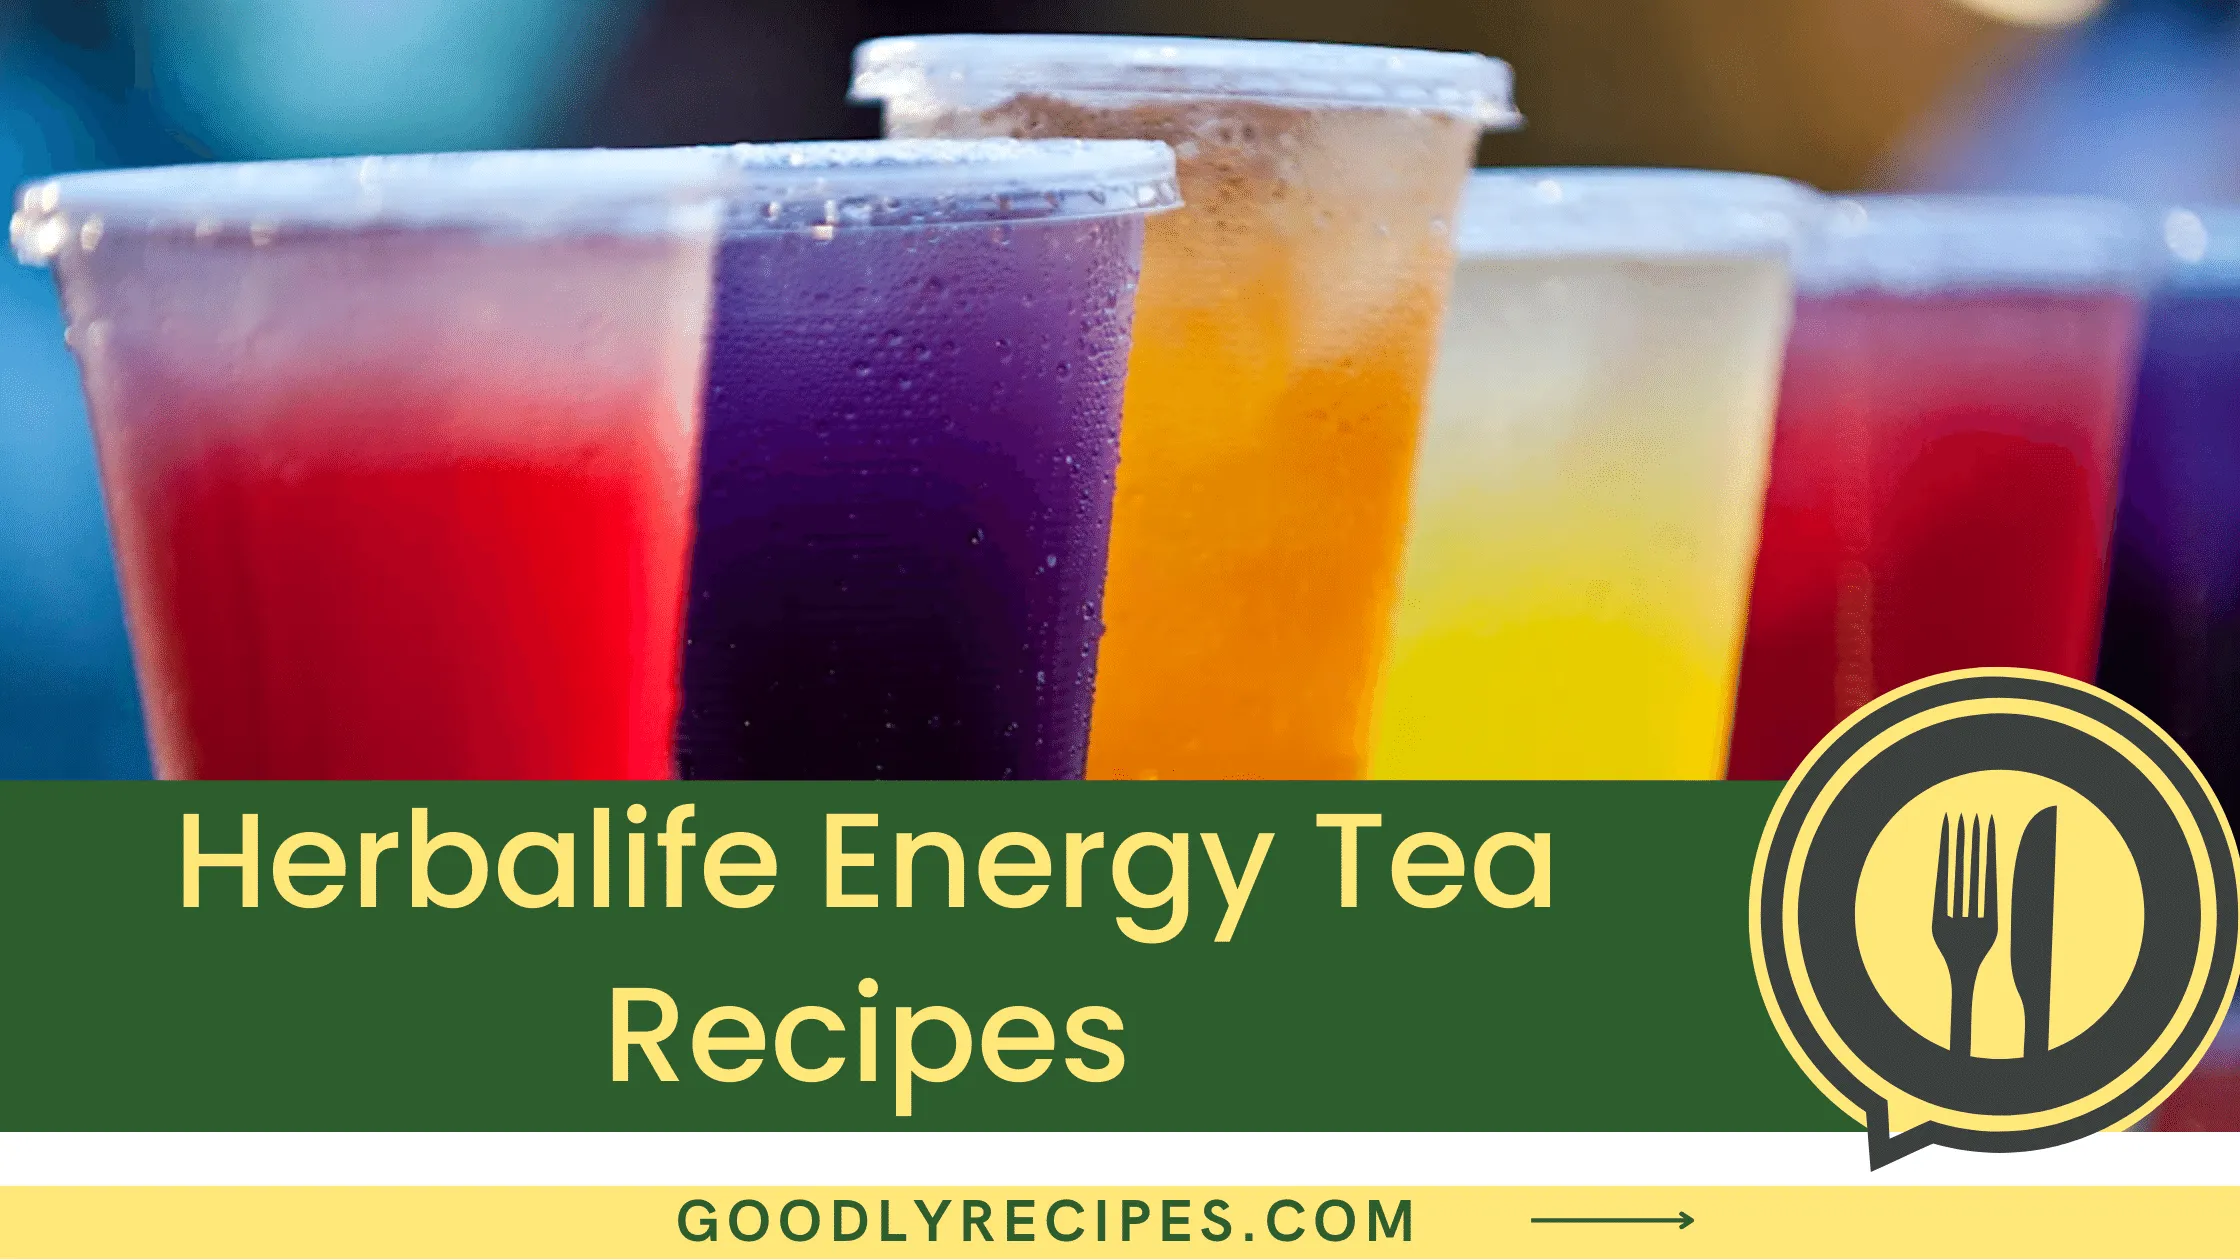 Herbalife Energy Tea Recipes